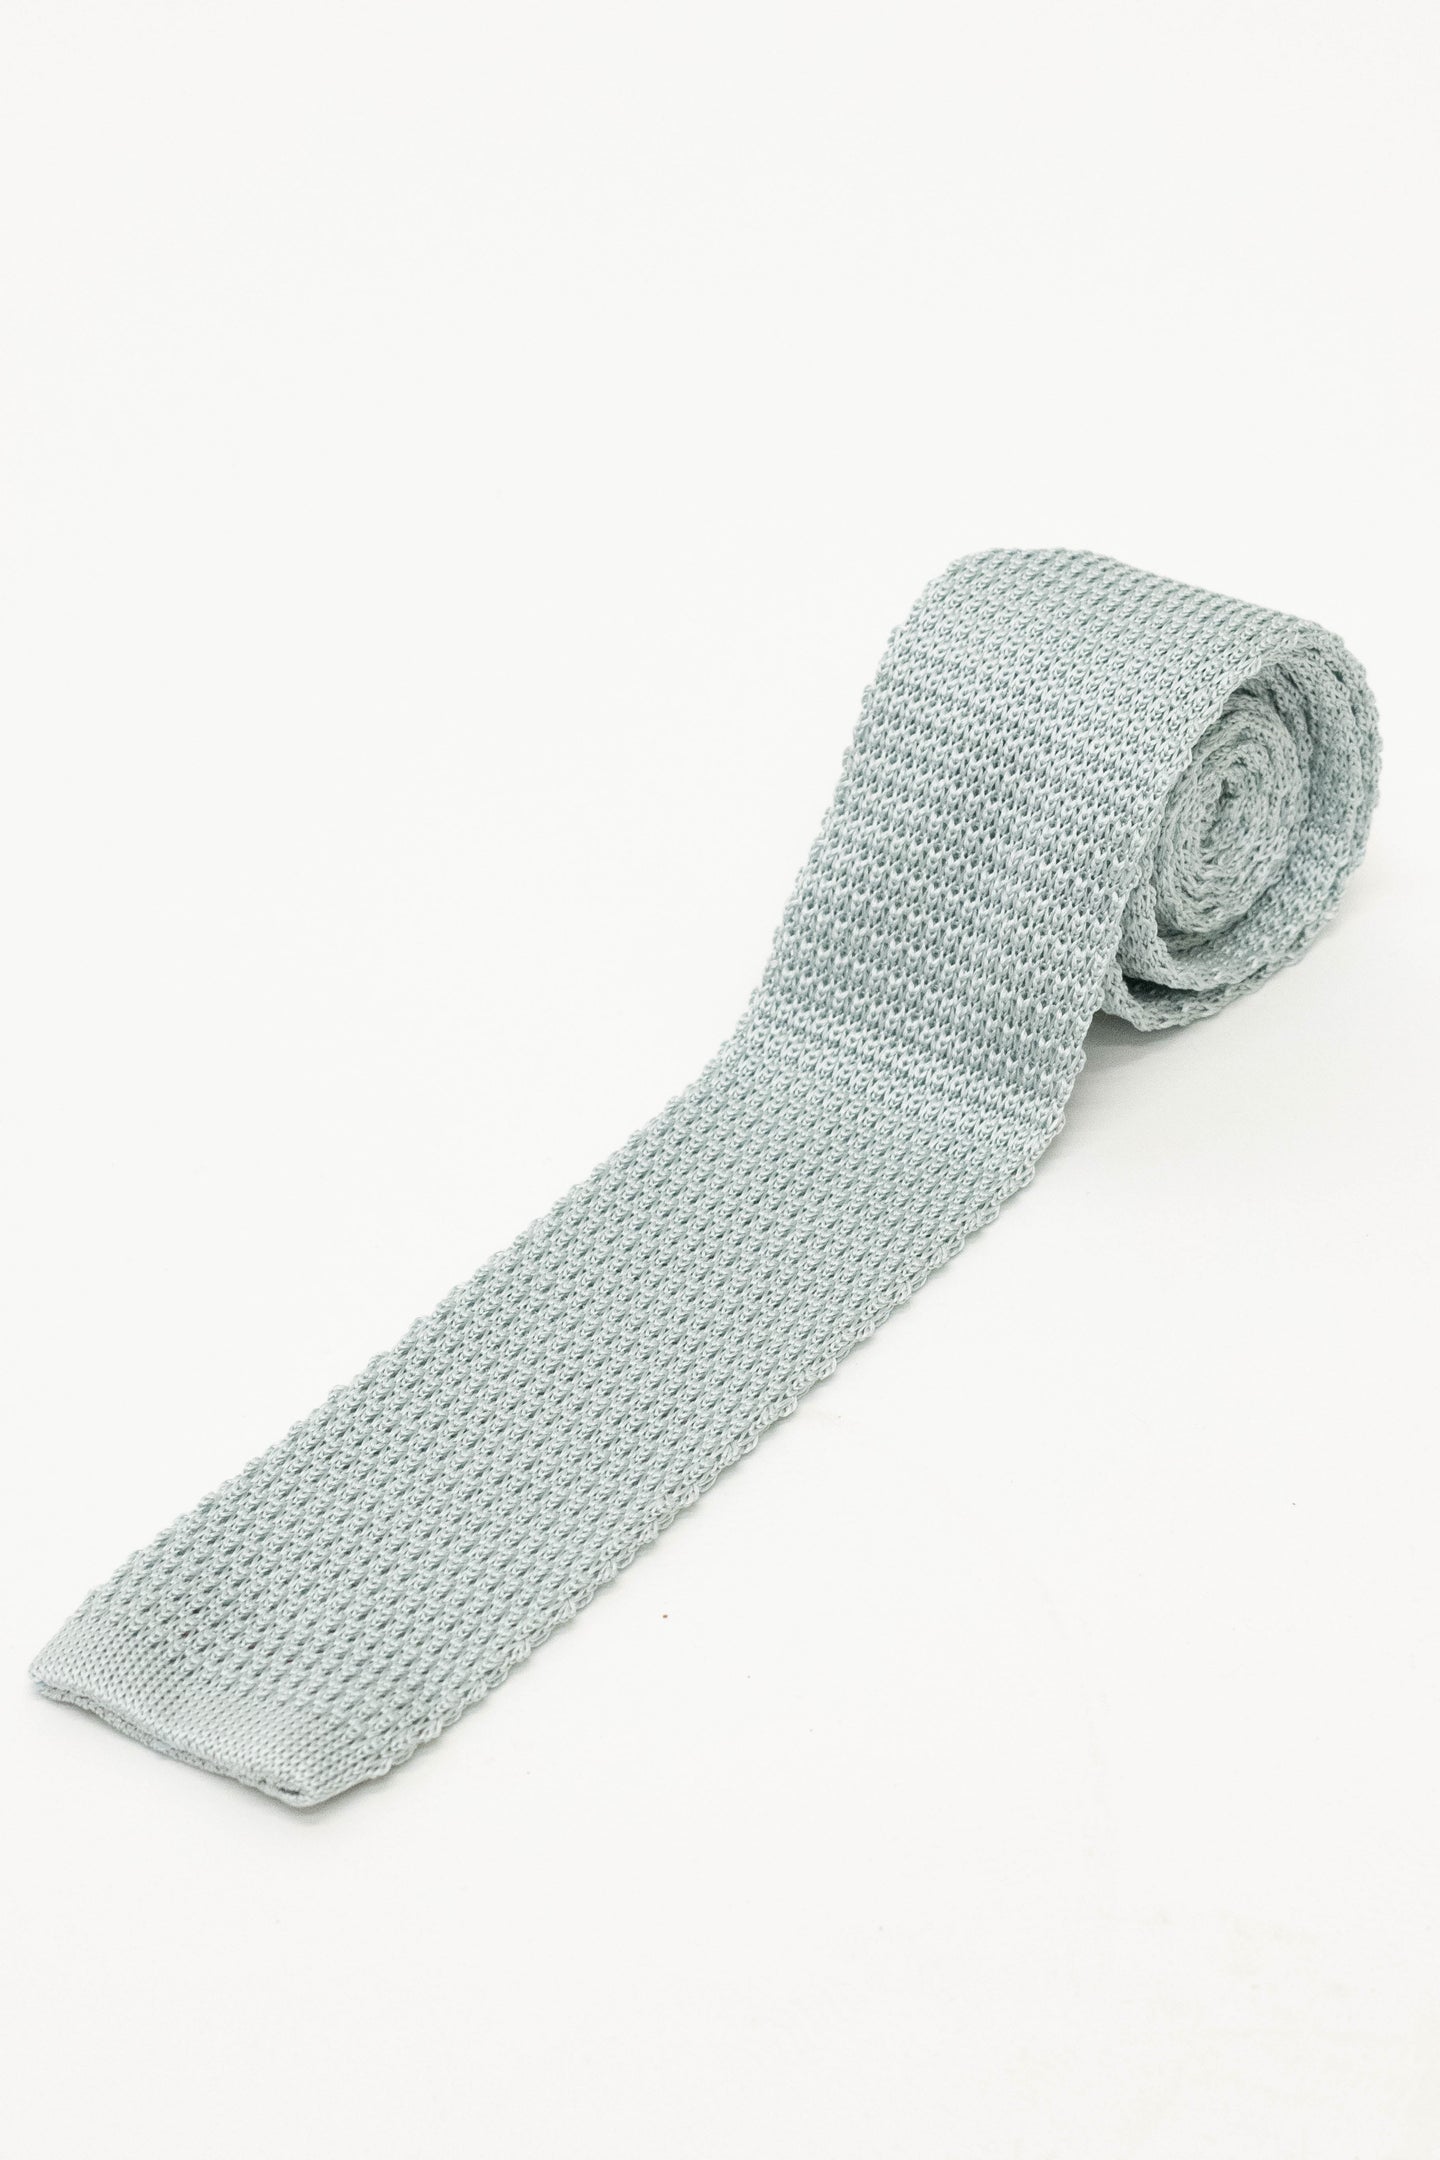 Knightsbridge Neckwear Plain Sage Green Silk Knitted Tie